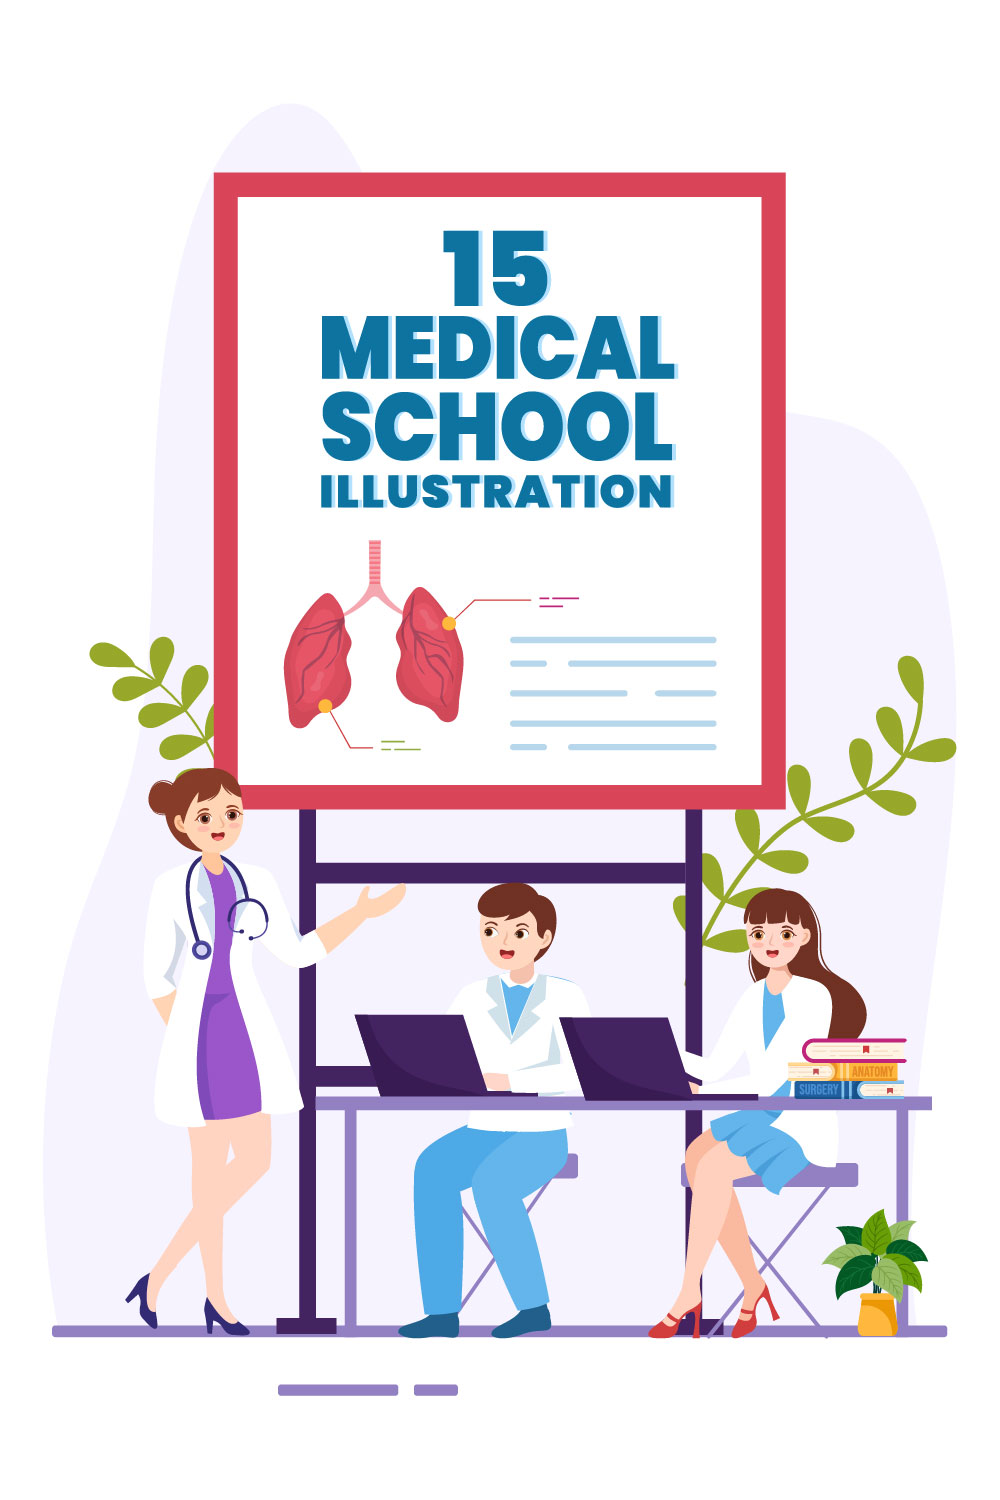 Medical School Illustration pinterest image.